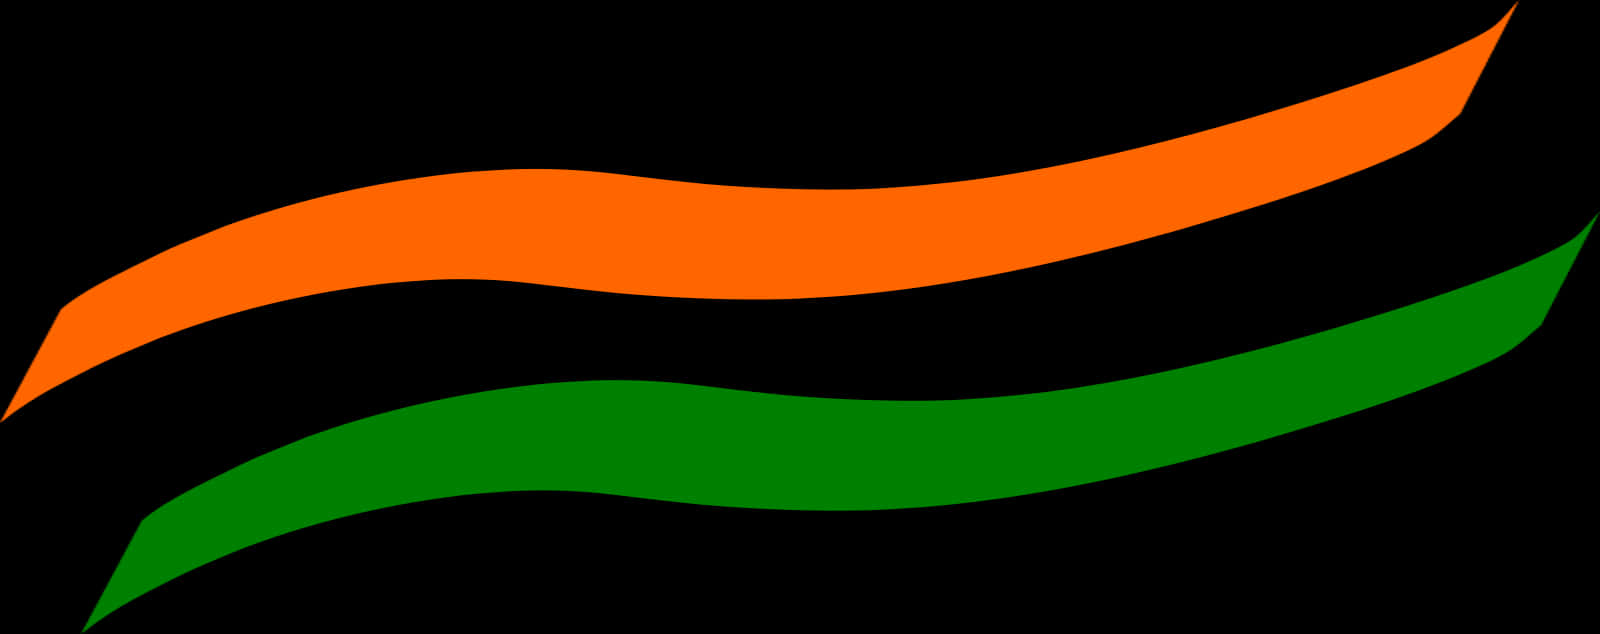 A Green And Orange Stripes